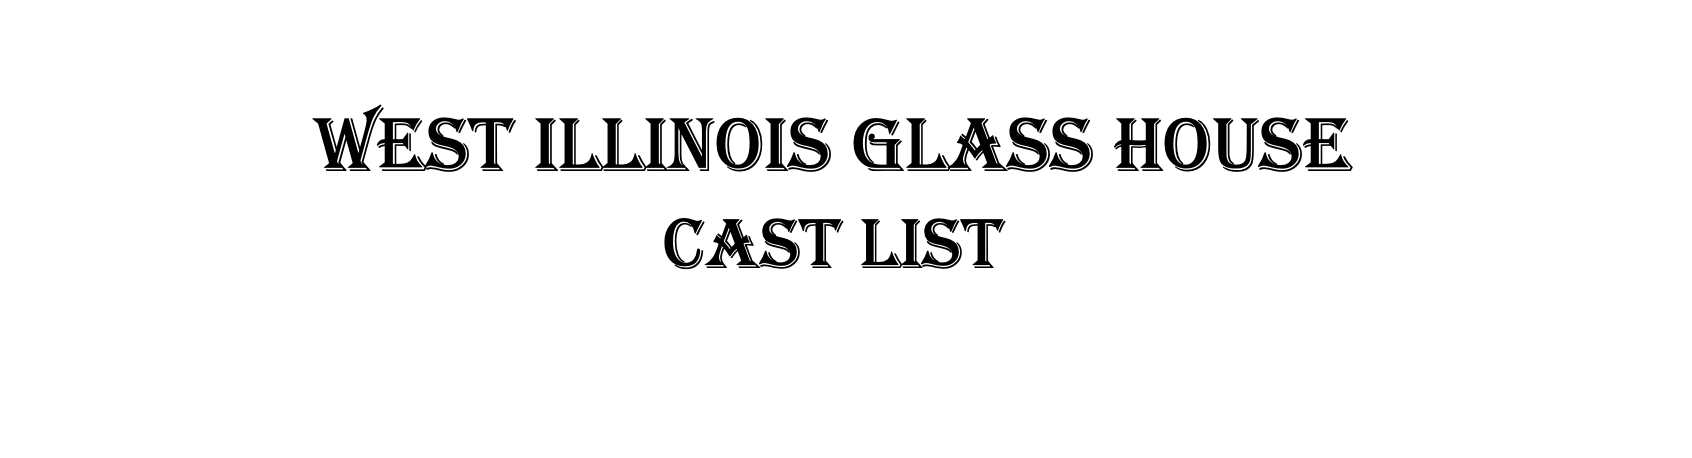 West Illinois Glass House Castlist Header